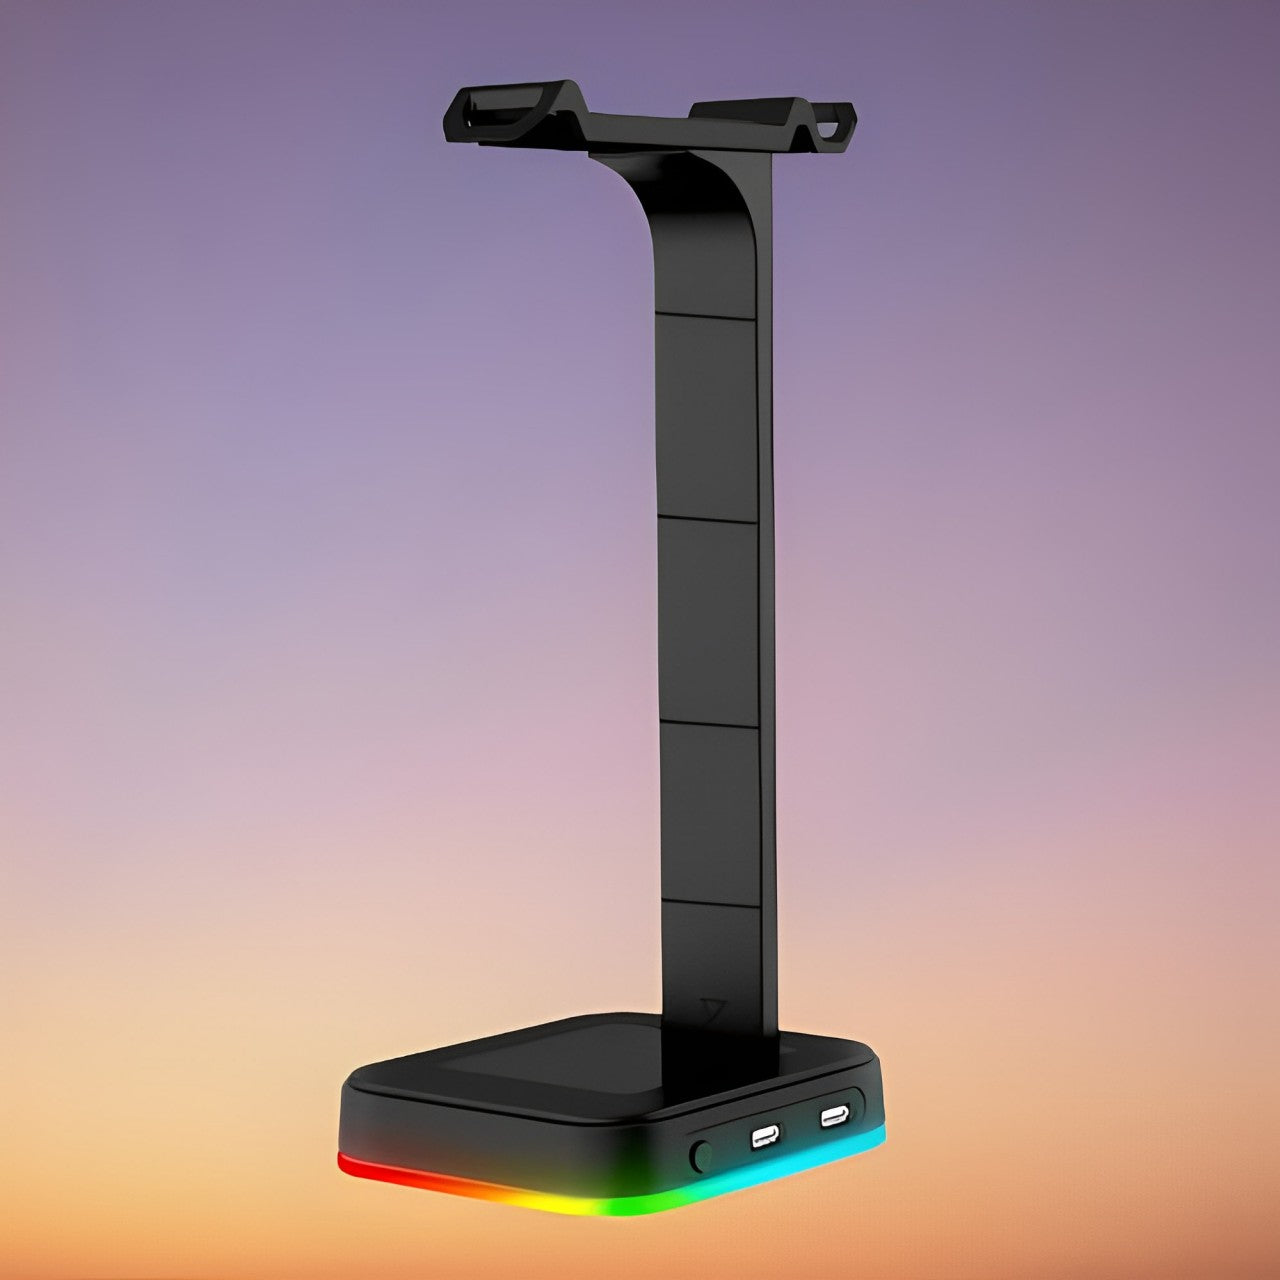 RGB Glowing LED Headphone Stand